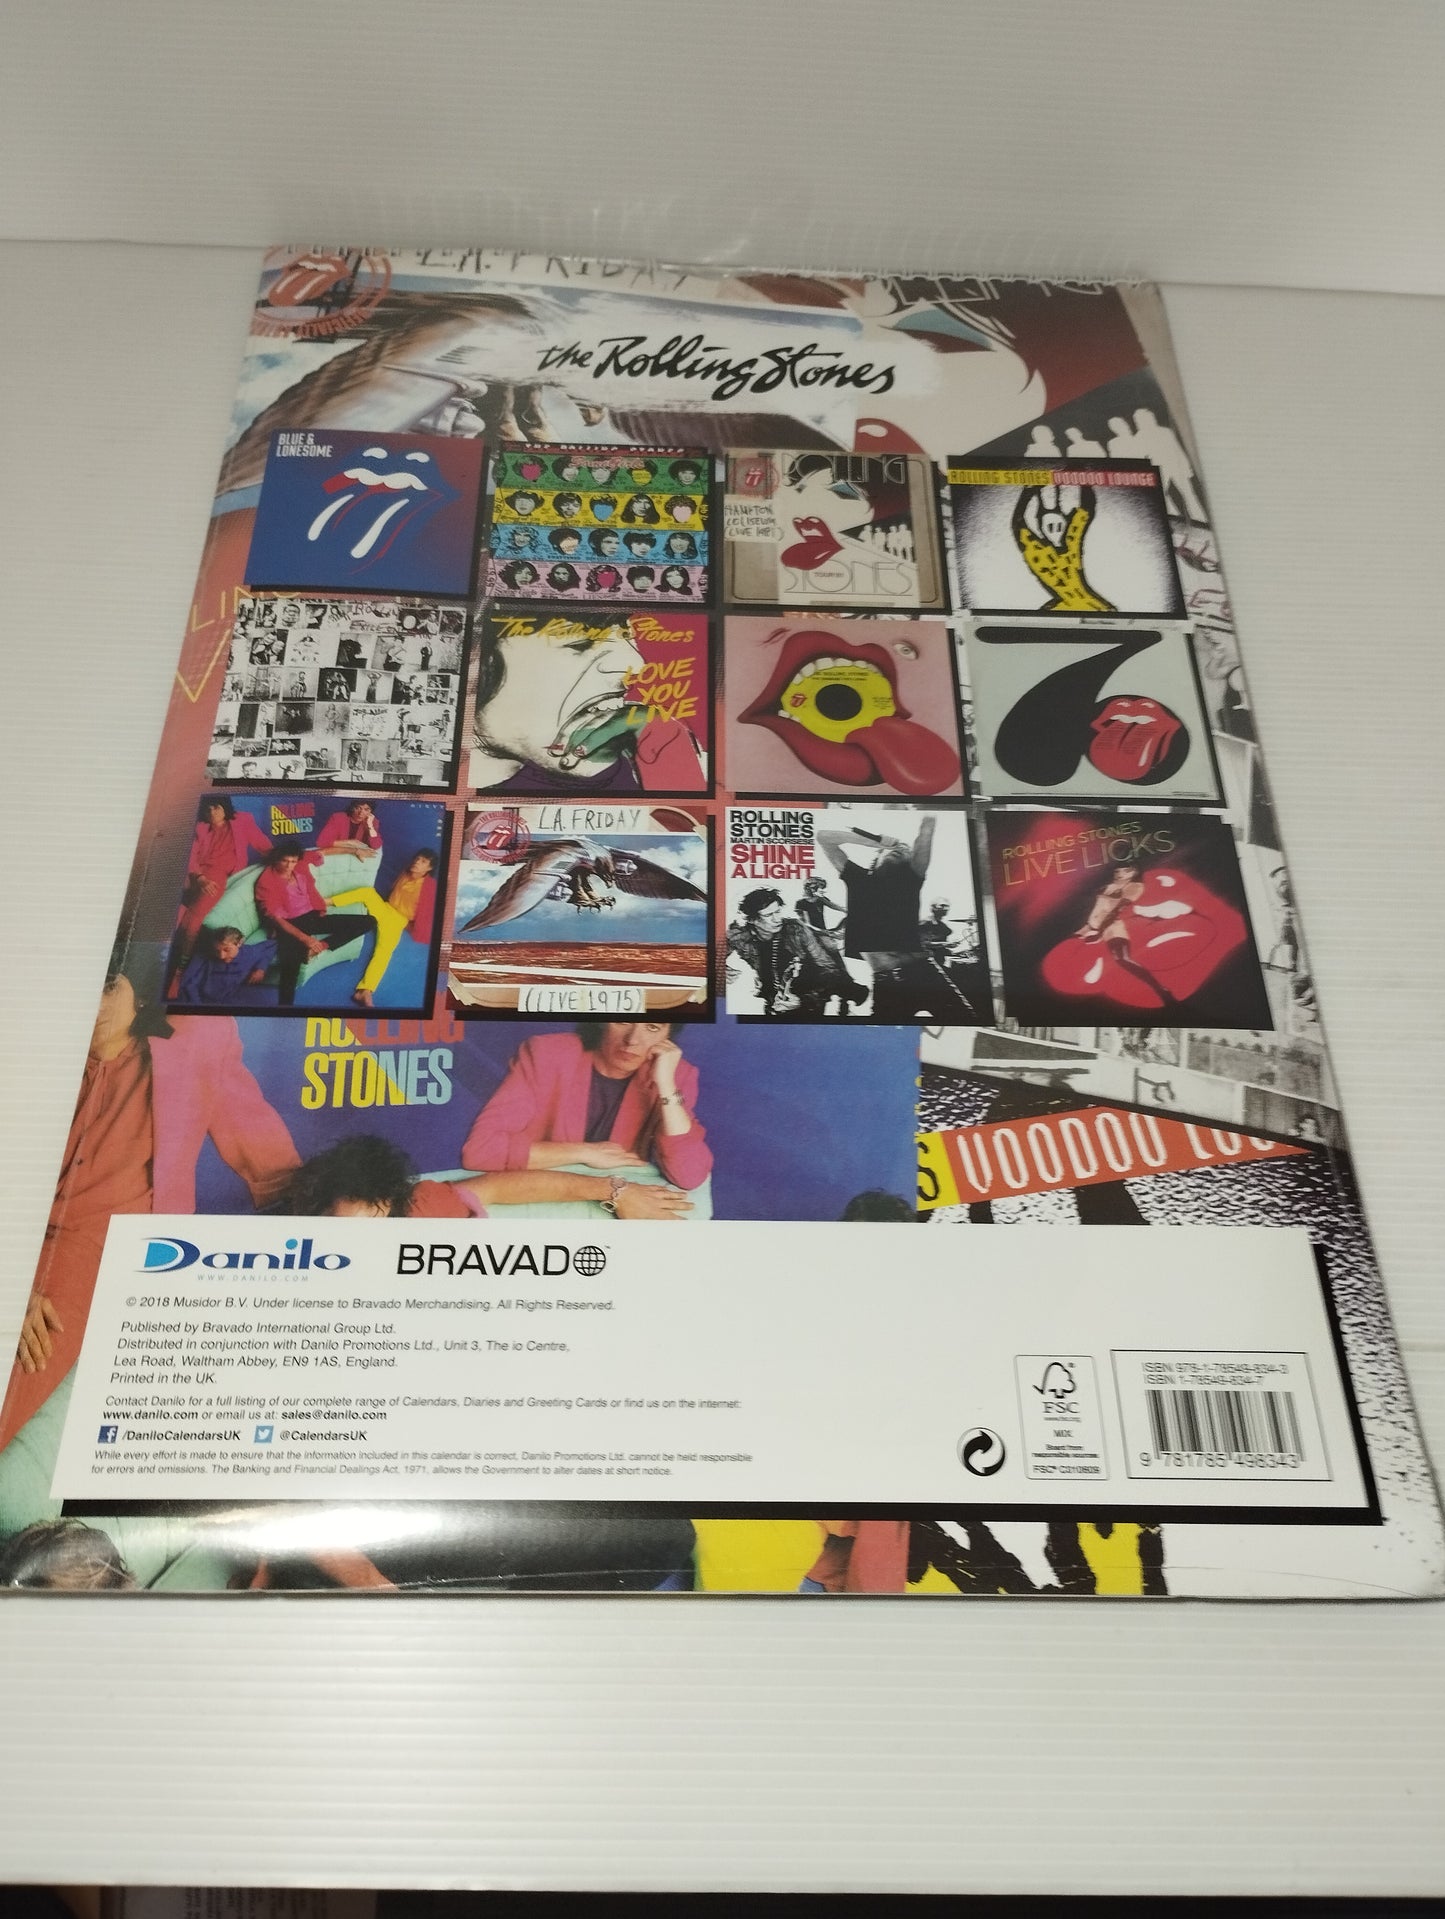 The Rolling Stones Calendario Ufficiale 2019
Printed in UK